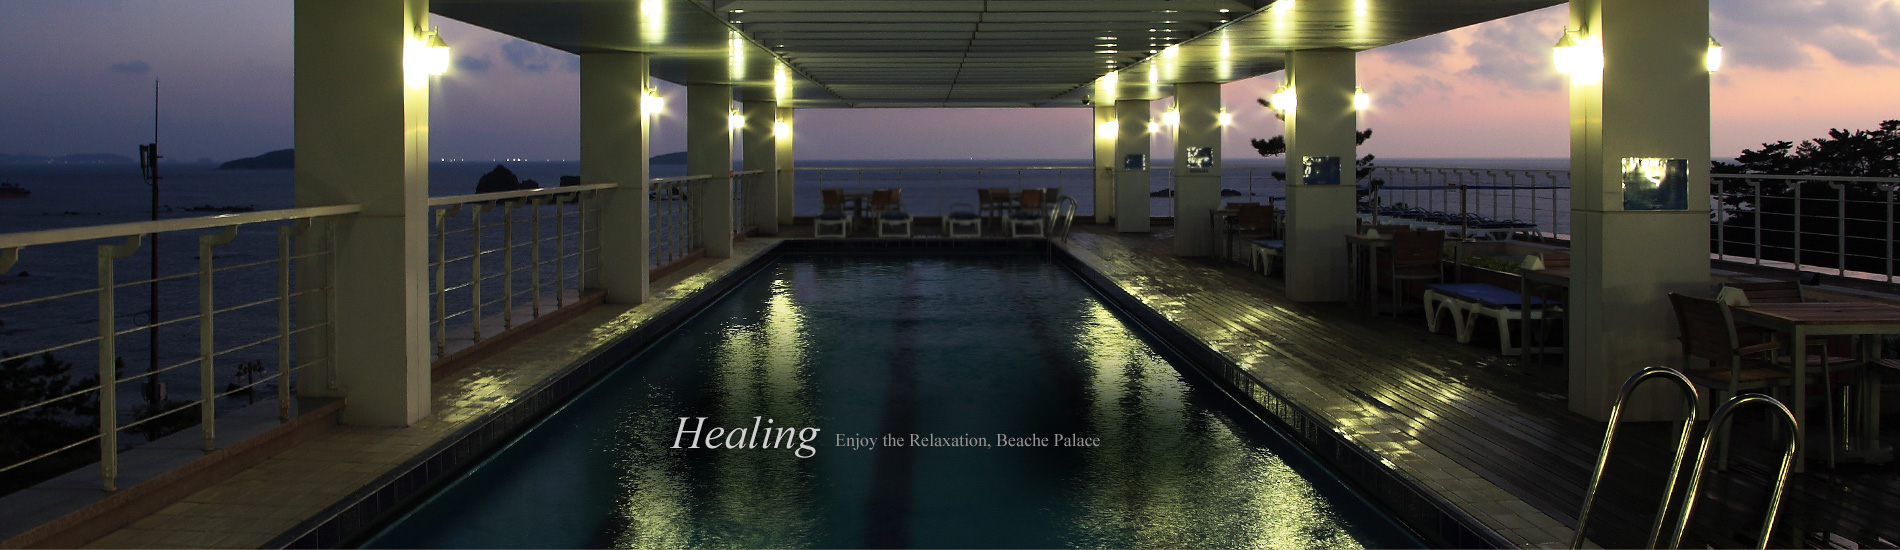 Healing Enjoy the Relaxation, Beache Palace